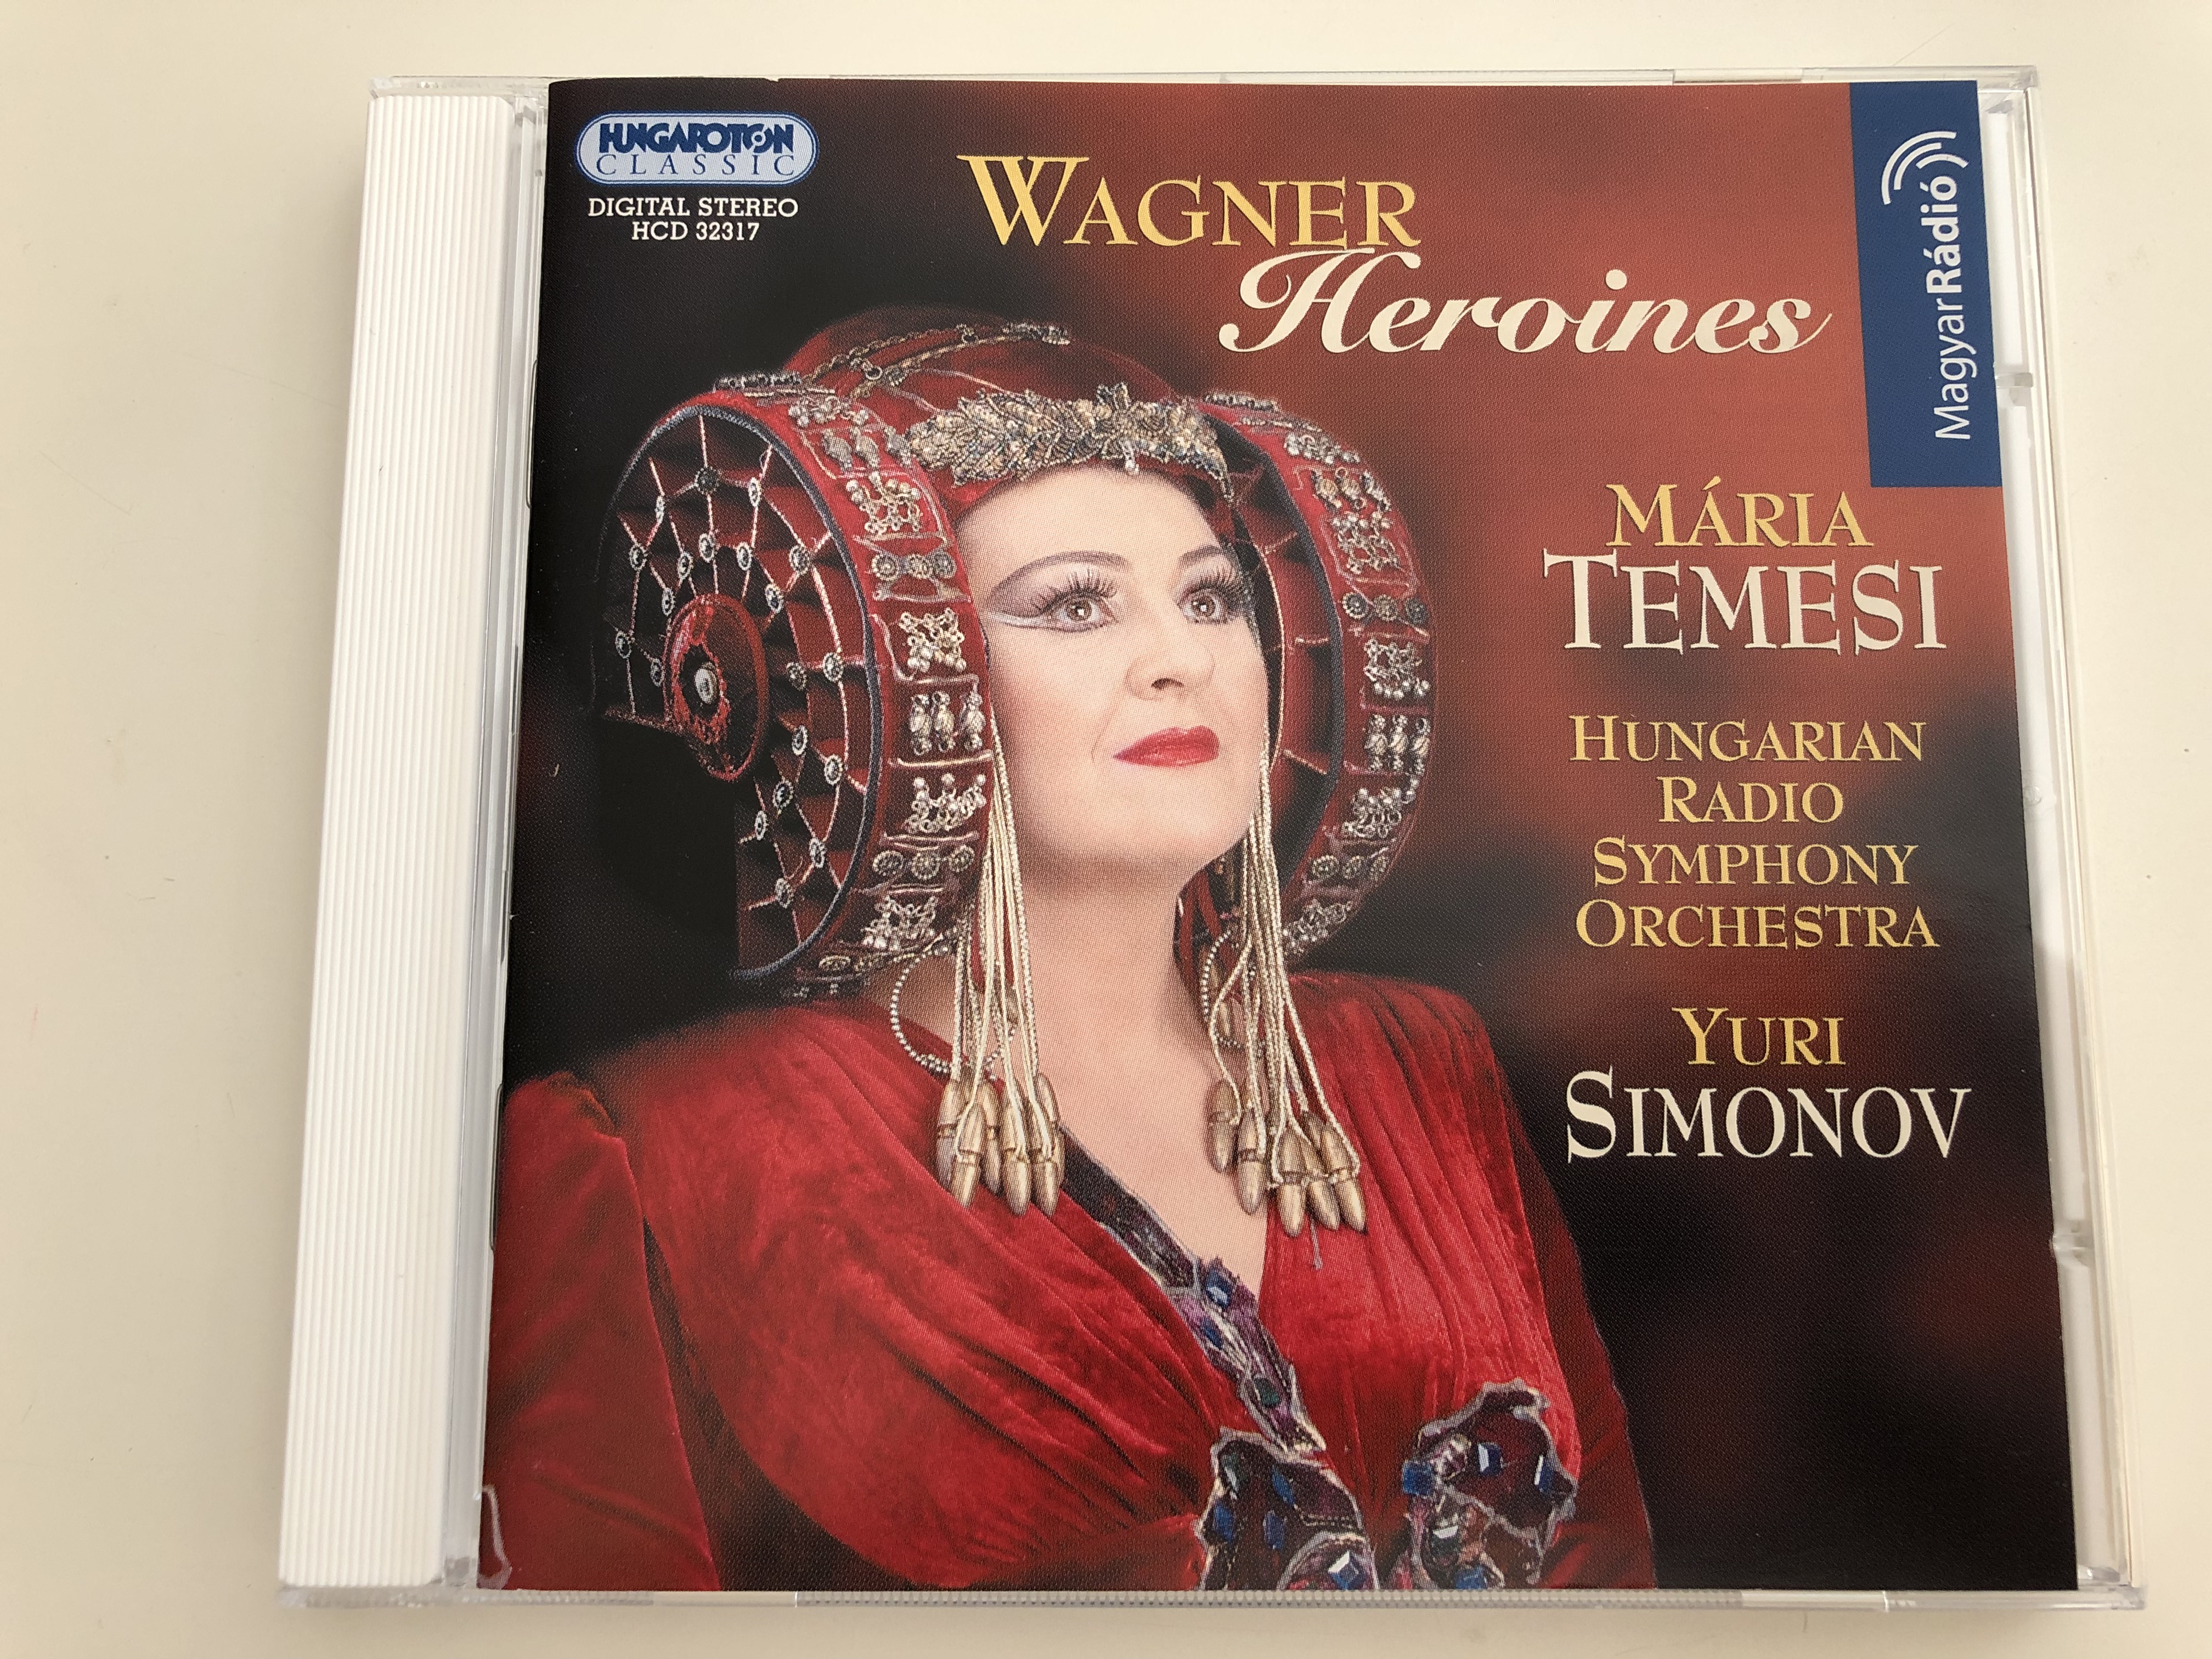 -wagner-heroines-m-ria-temesi-hungarian-radio-symphony-orchestra-conducted-by-yuri-simonov-hungaroton-classic-audio-cd-2004-hcd-32317-1-.jpg